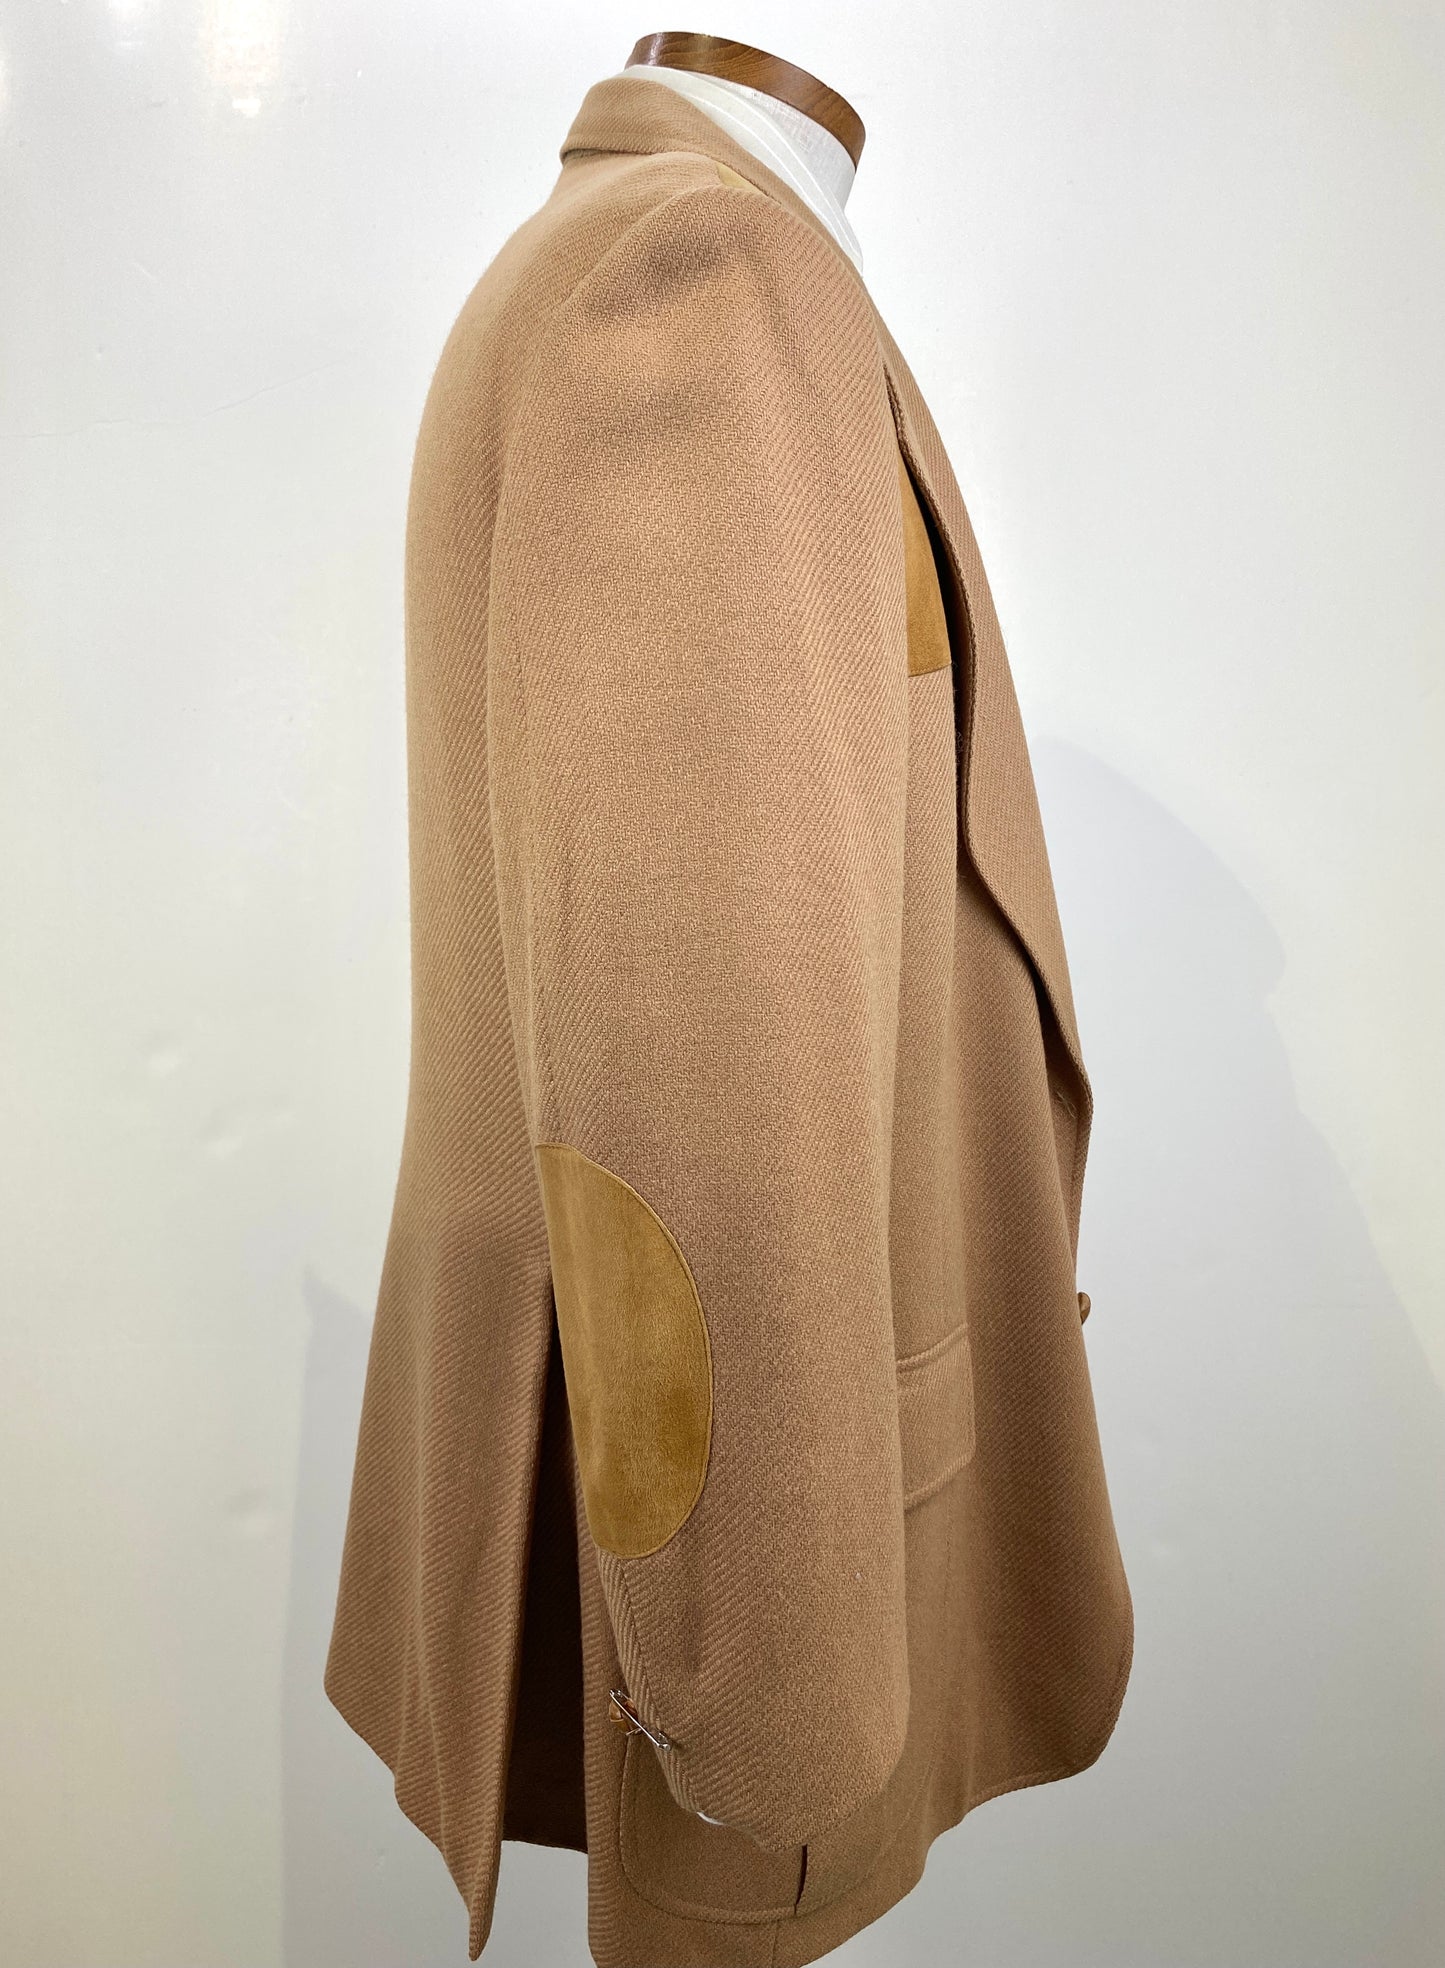 Vintage 1970s Men's Camel Wool Blazer, Dak's London Jacket, C46R